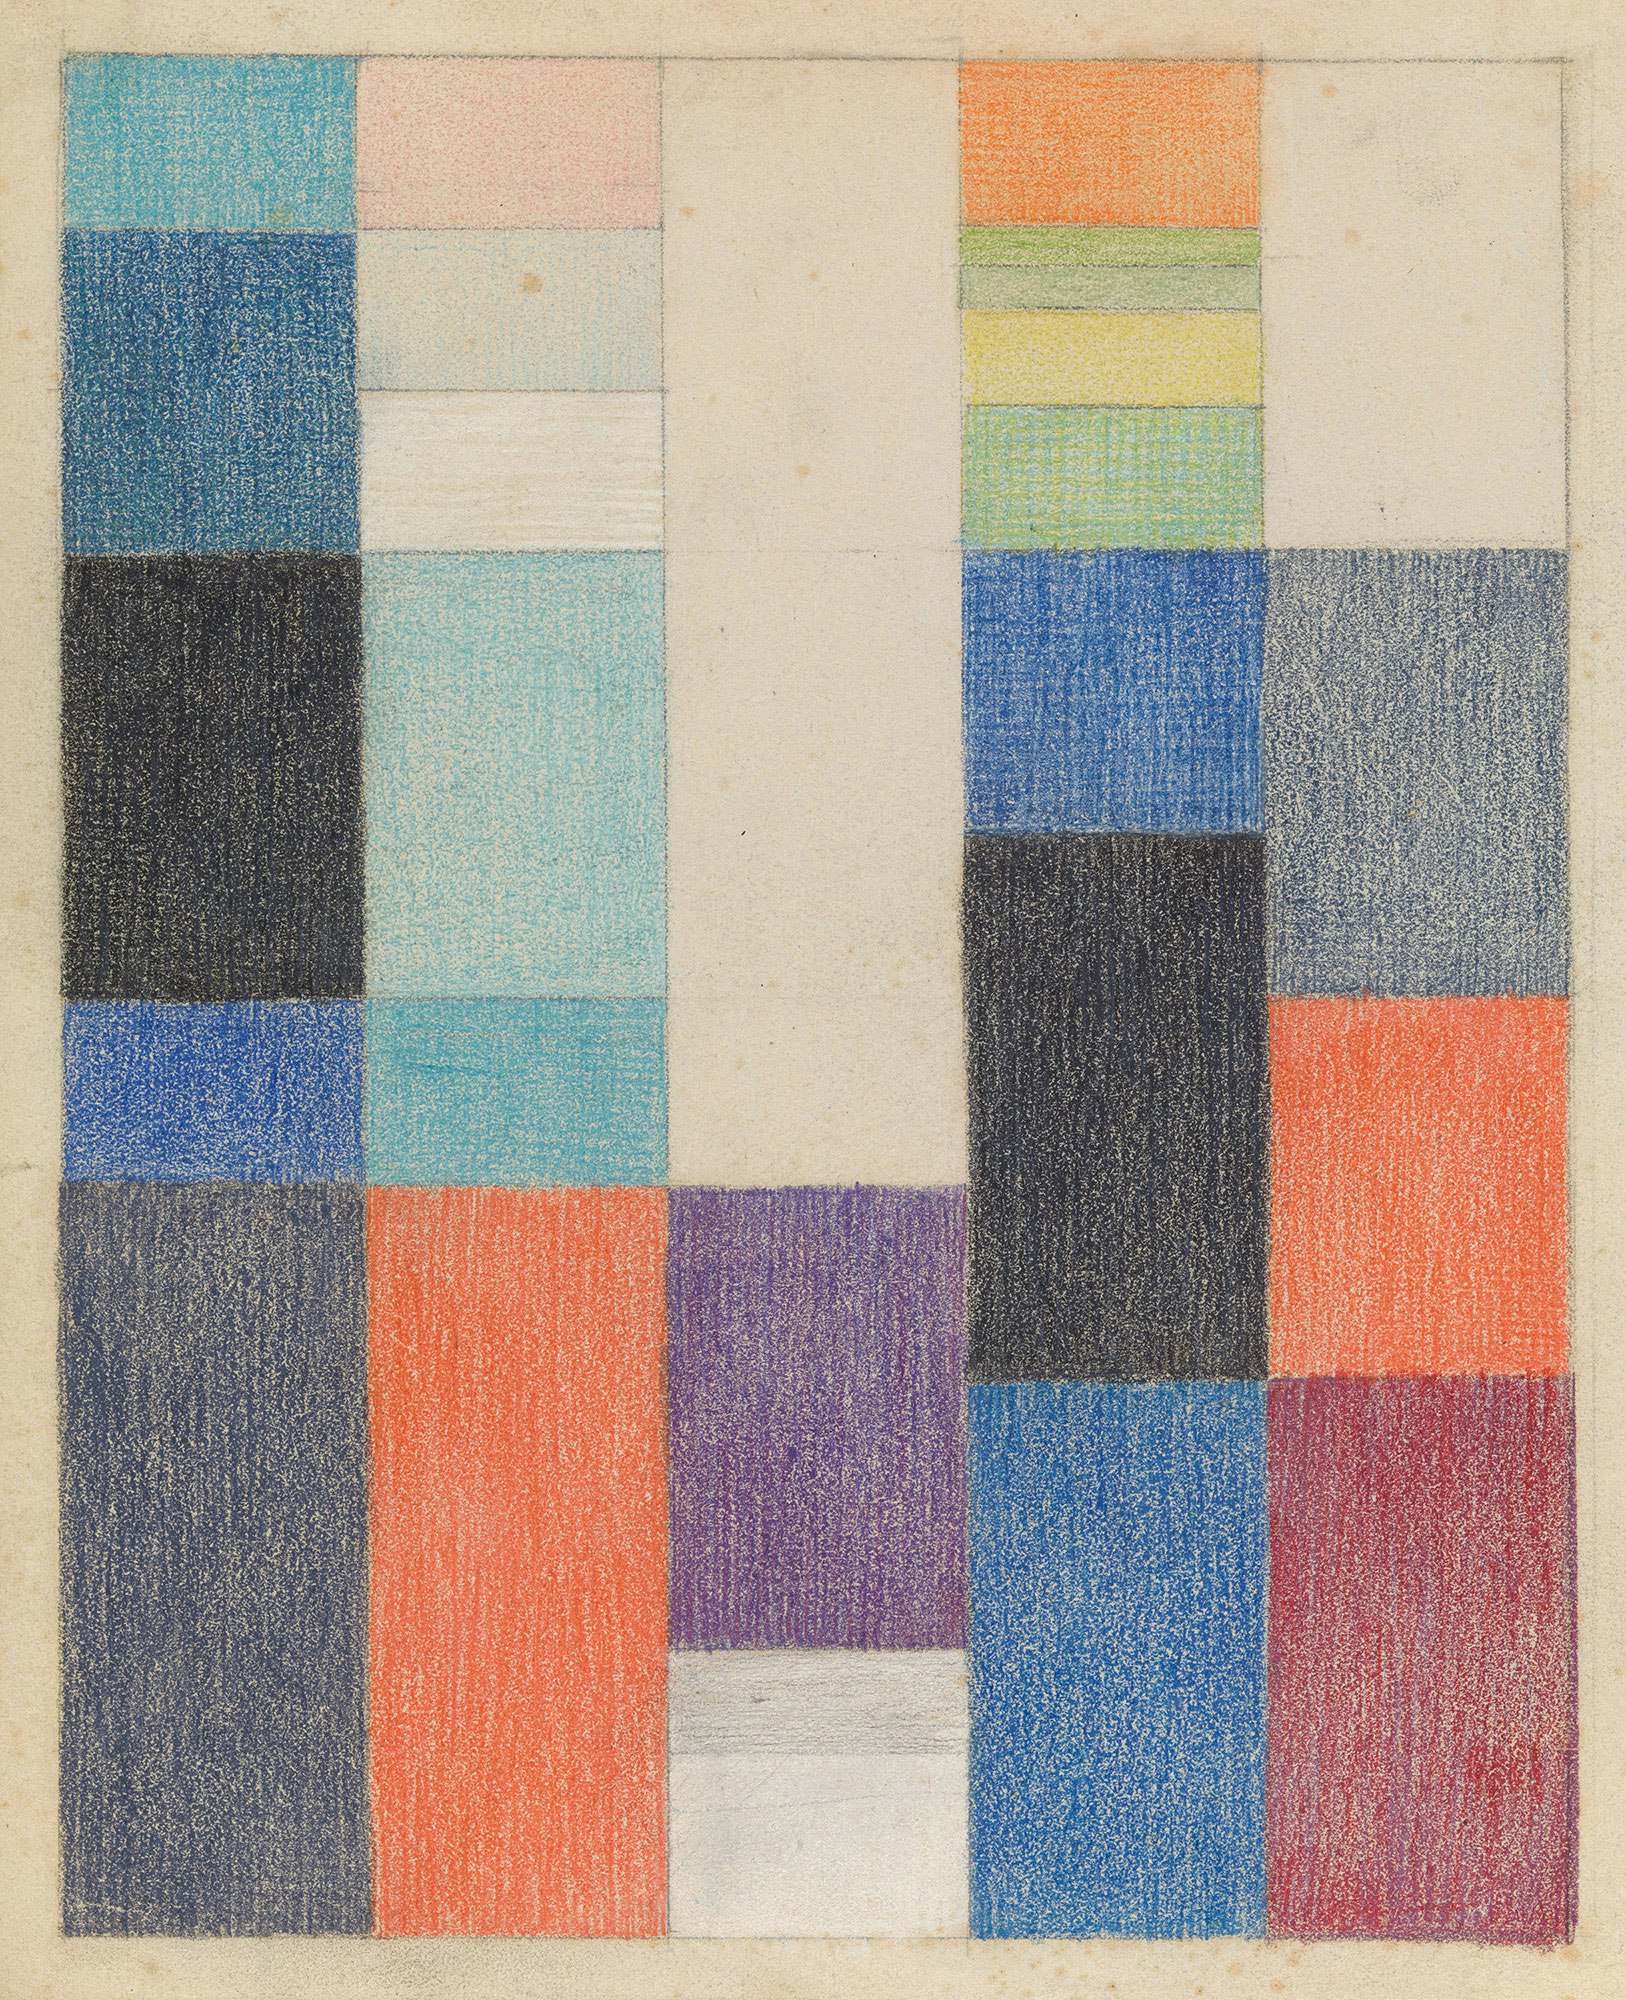 Sophie Taeuber-Arp, <em>Vertical-Horizontal Composition</em>, 1916. Colored pencil, gouache, and pencil on paper. 9 7/16 x 7 3/4 inches. Stiftung Arp e.V., Berlin. Photo: Alex Delfanne.